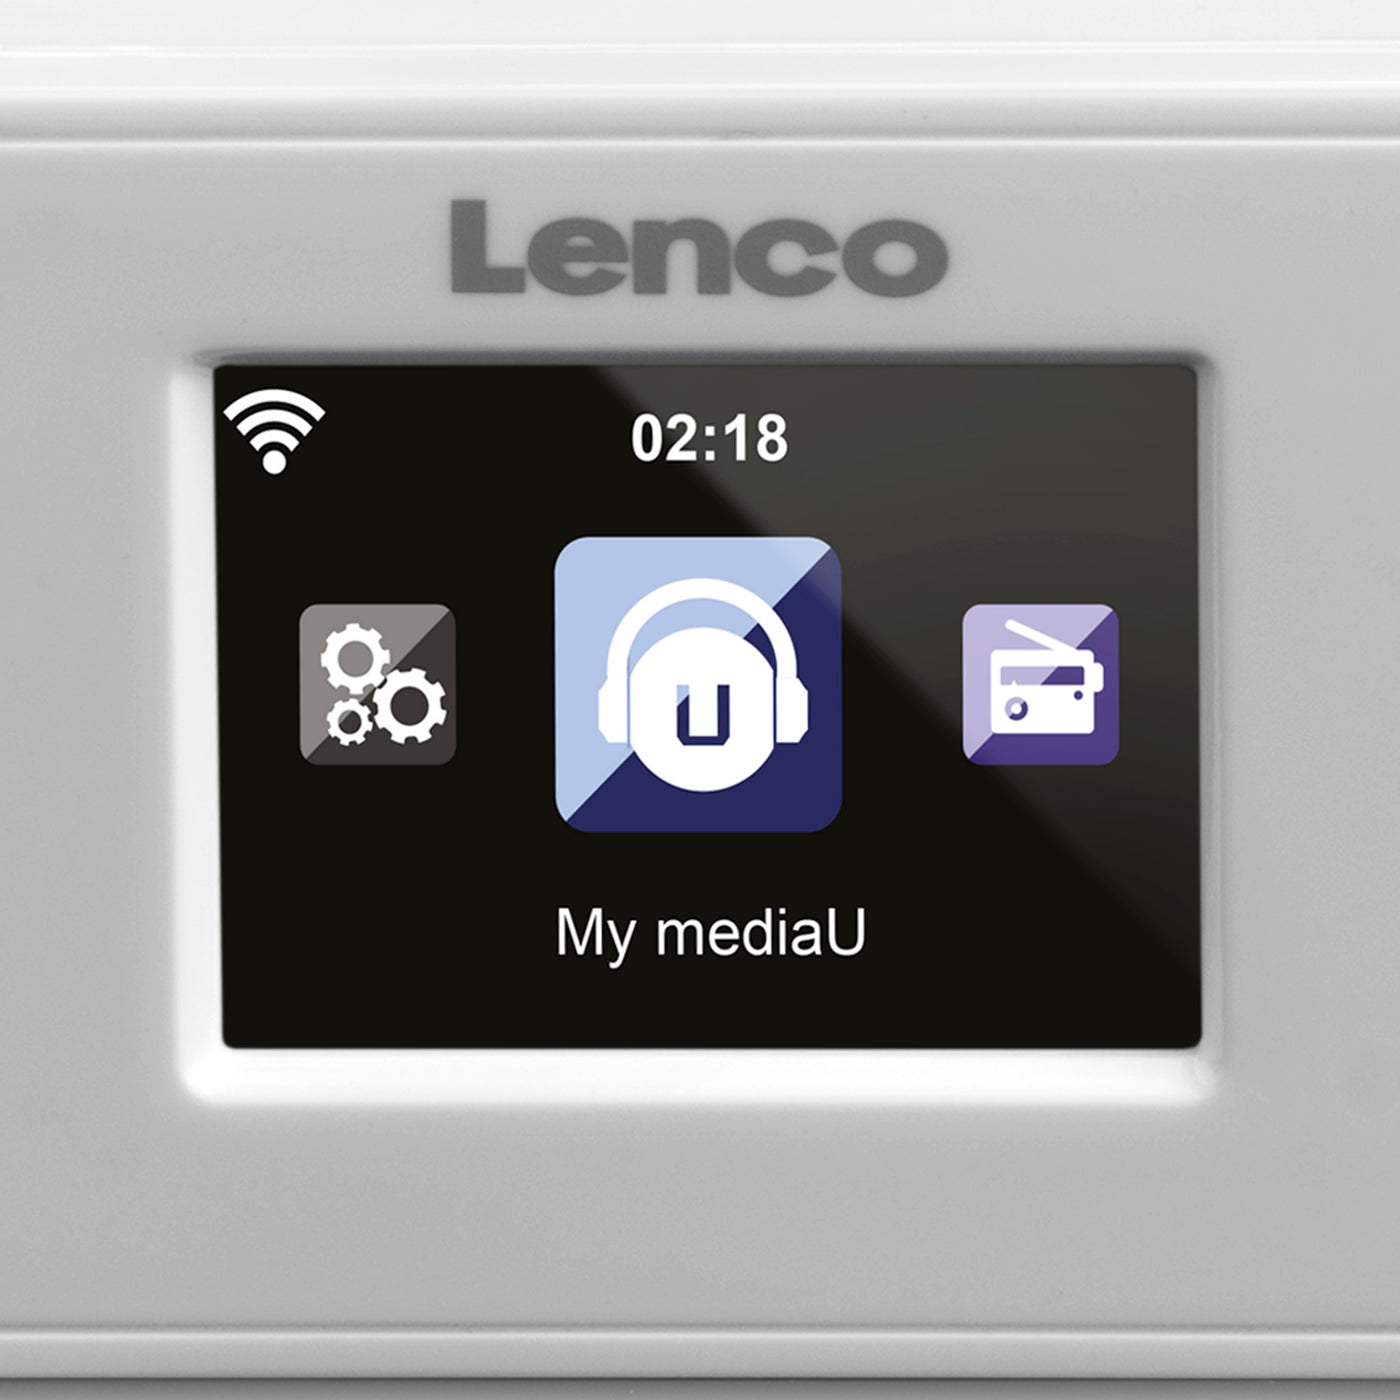 LENCO KCR-14 - Keuken internetradio met FM - Wit